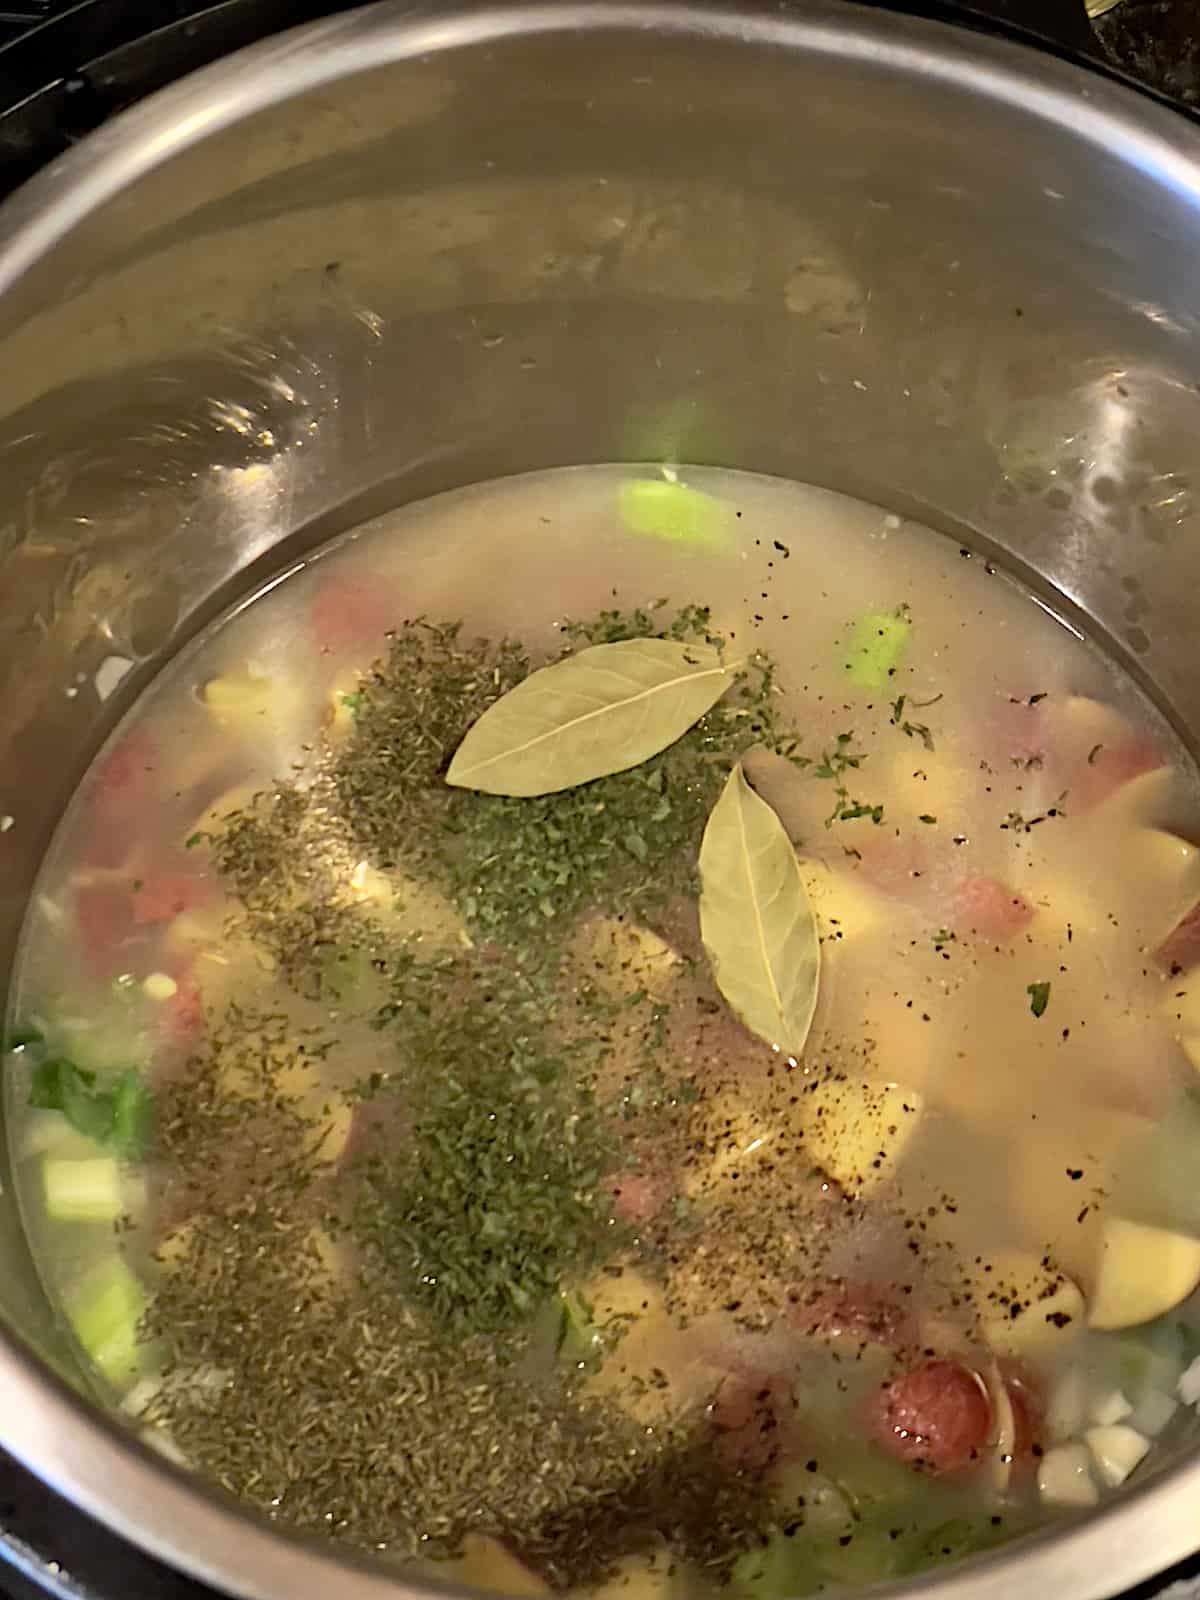 potatoes, clam juice, chicken broth, seasonings and vegetables in a pressure cooker